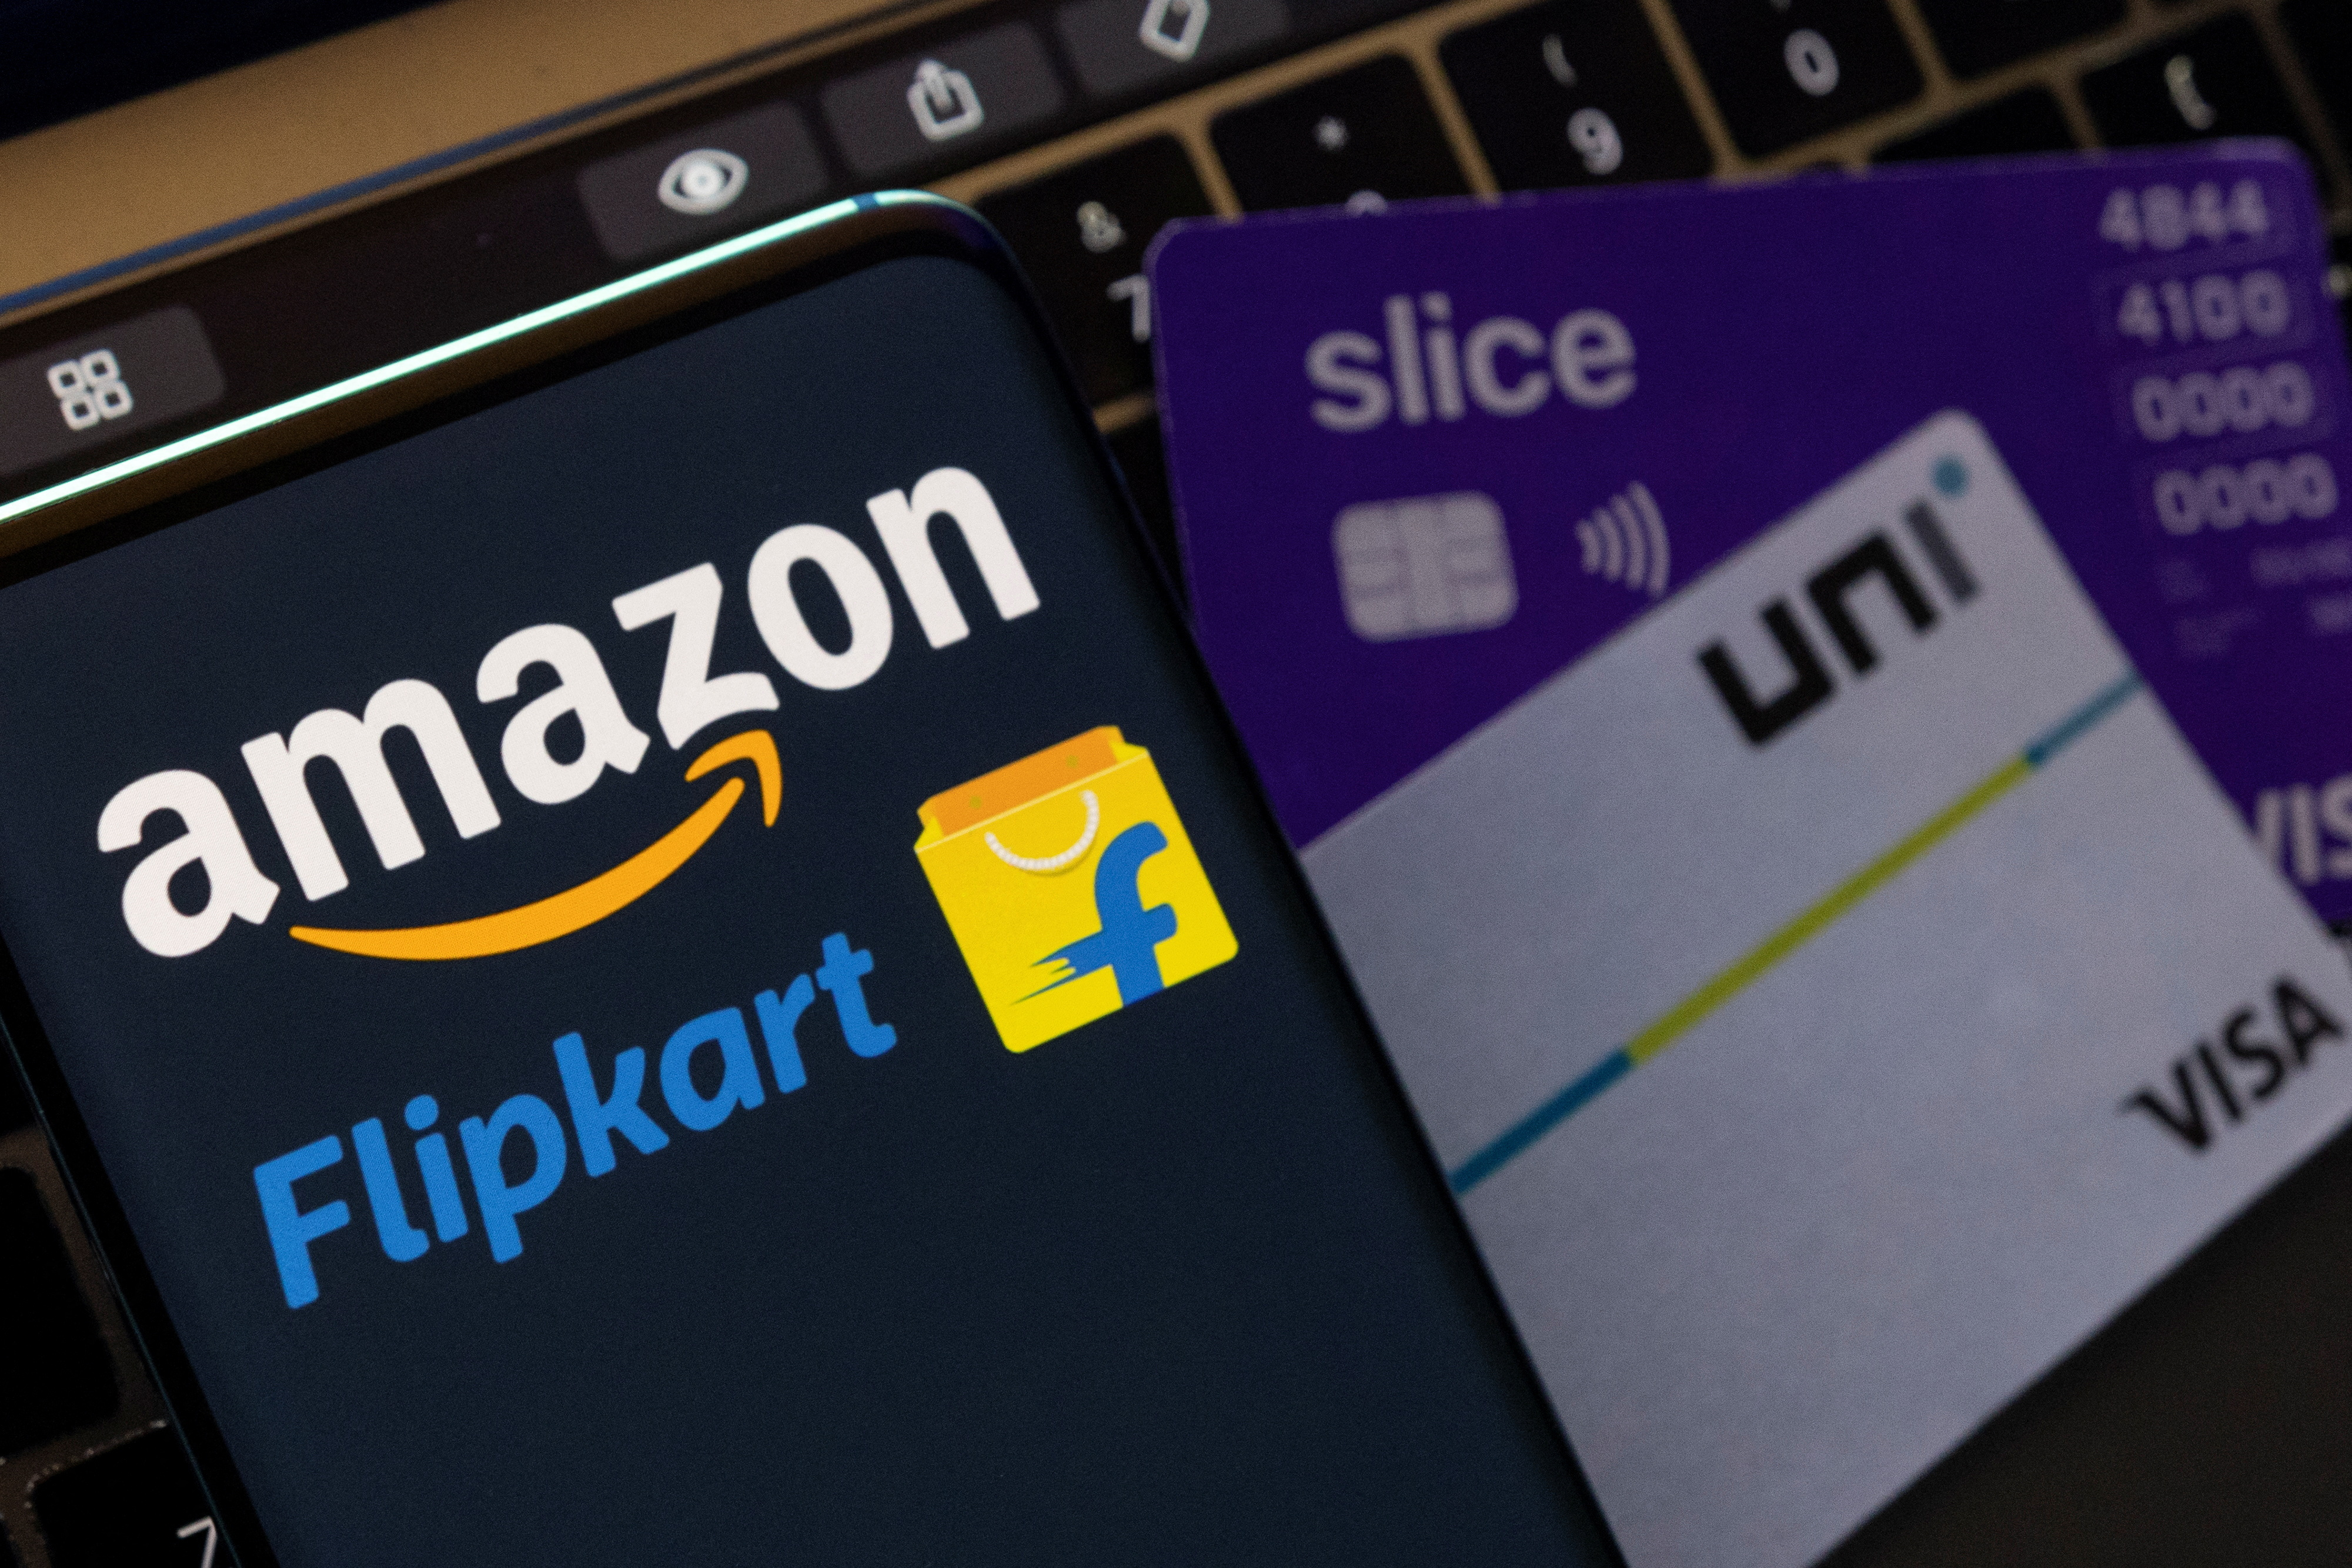 Illustration shows Amazon, Flipkart, Slice and Uni logos